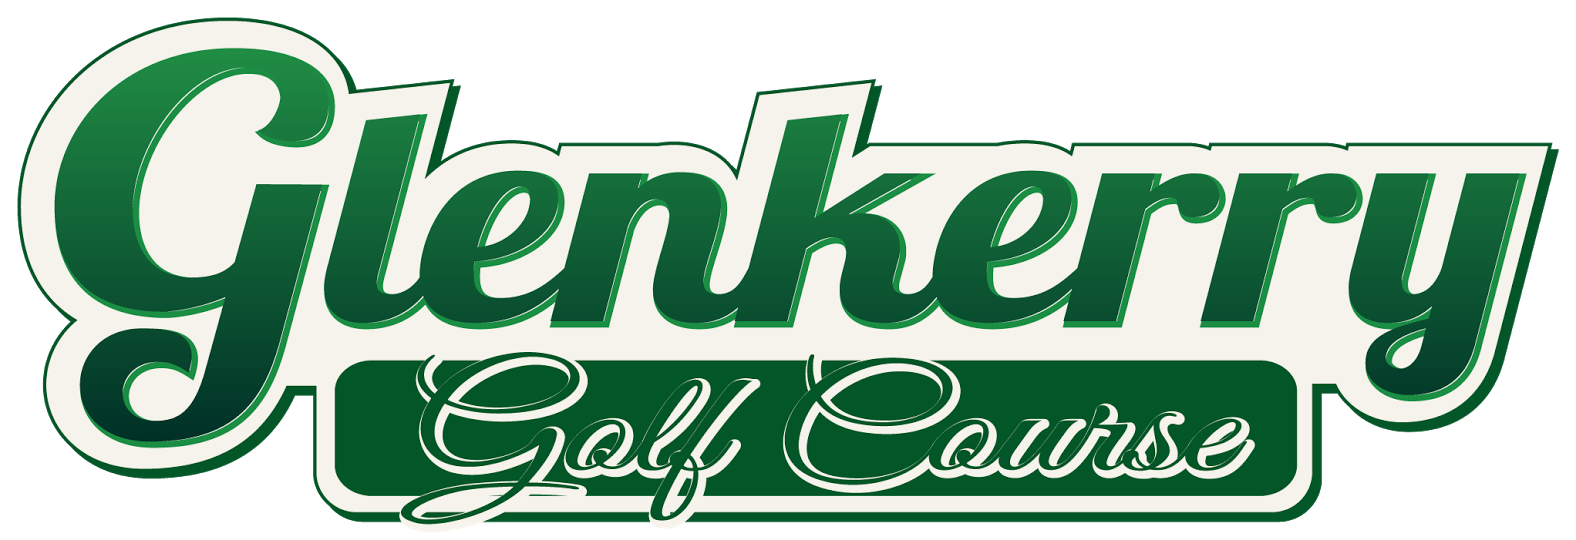 Glenkerry Golf Course Logo